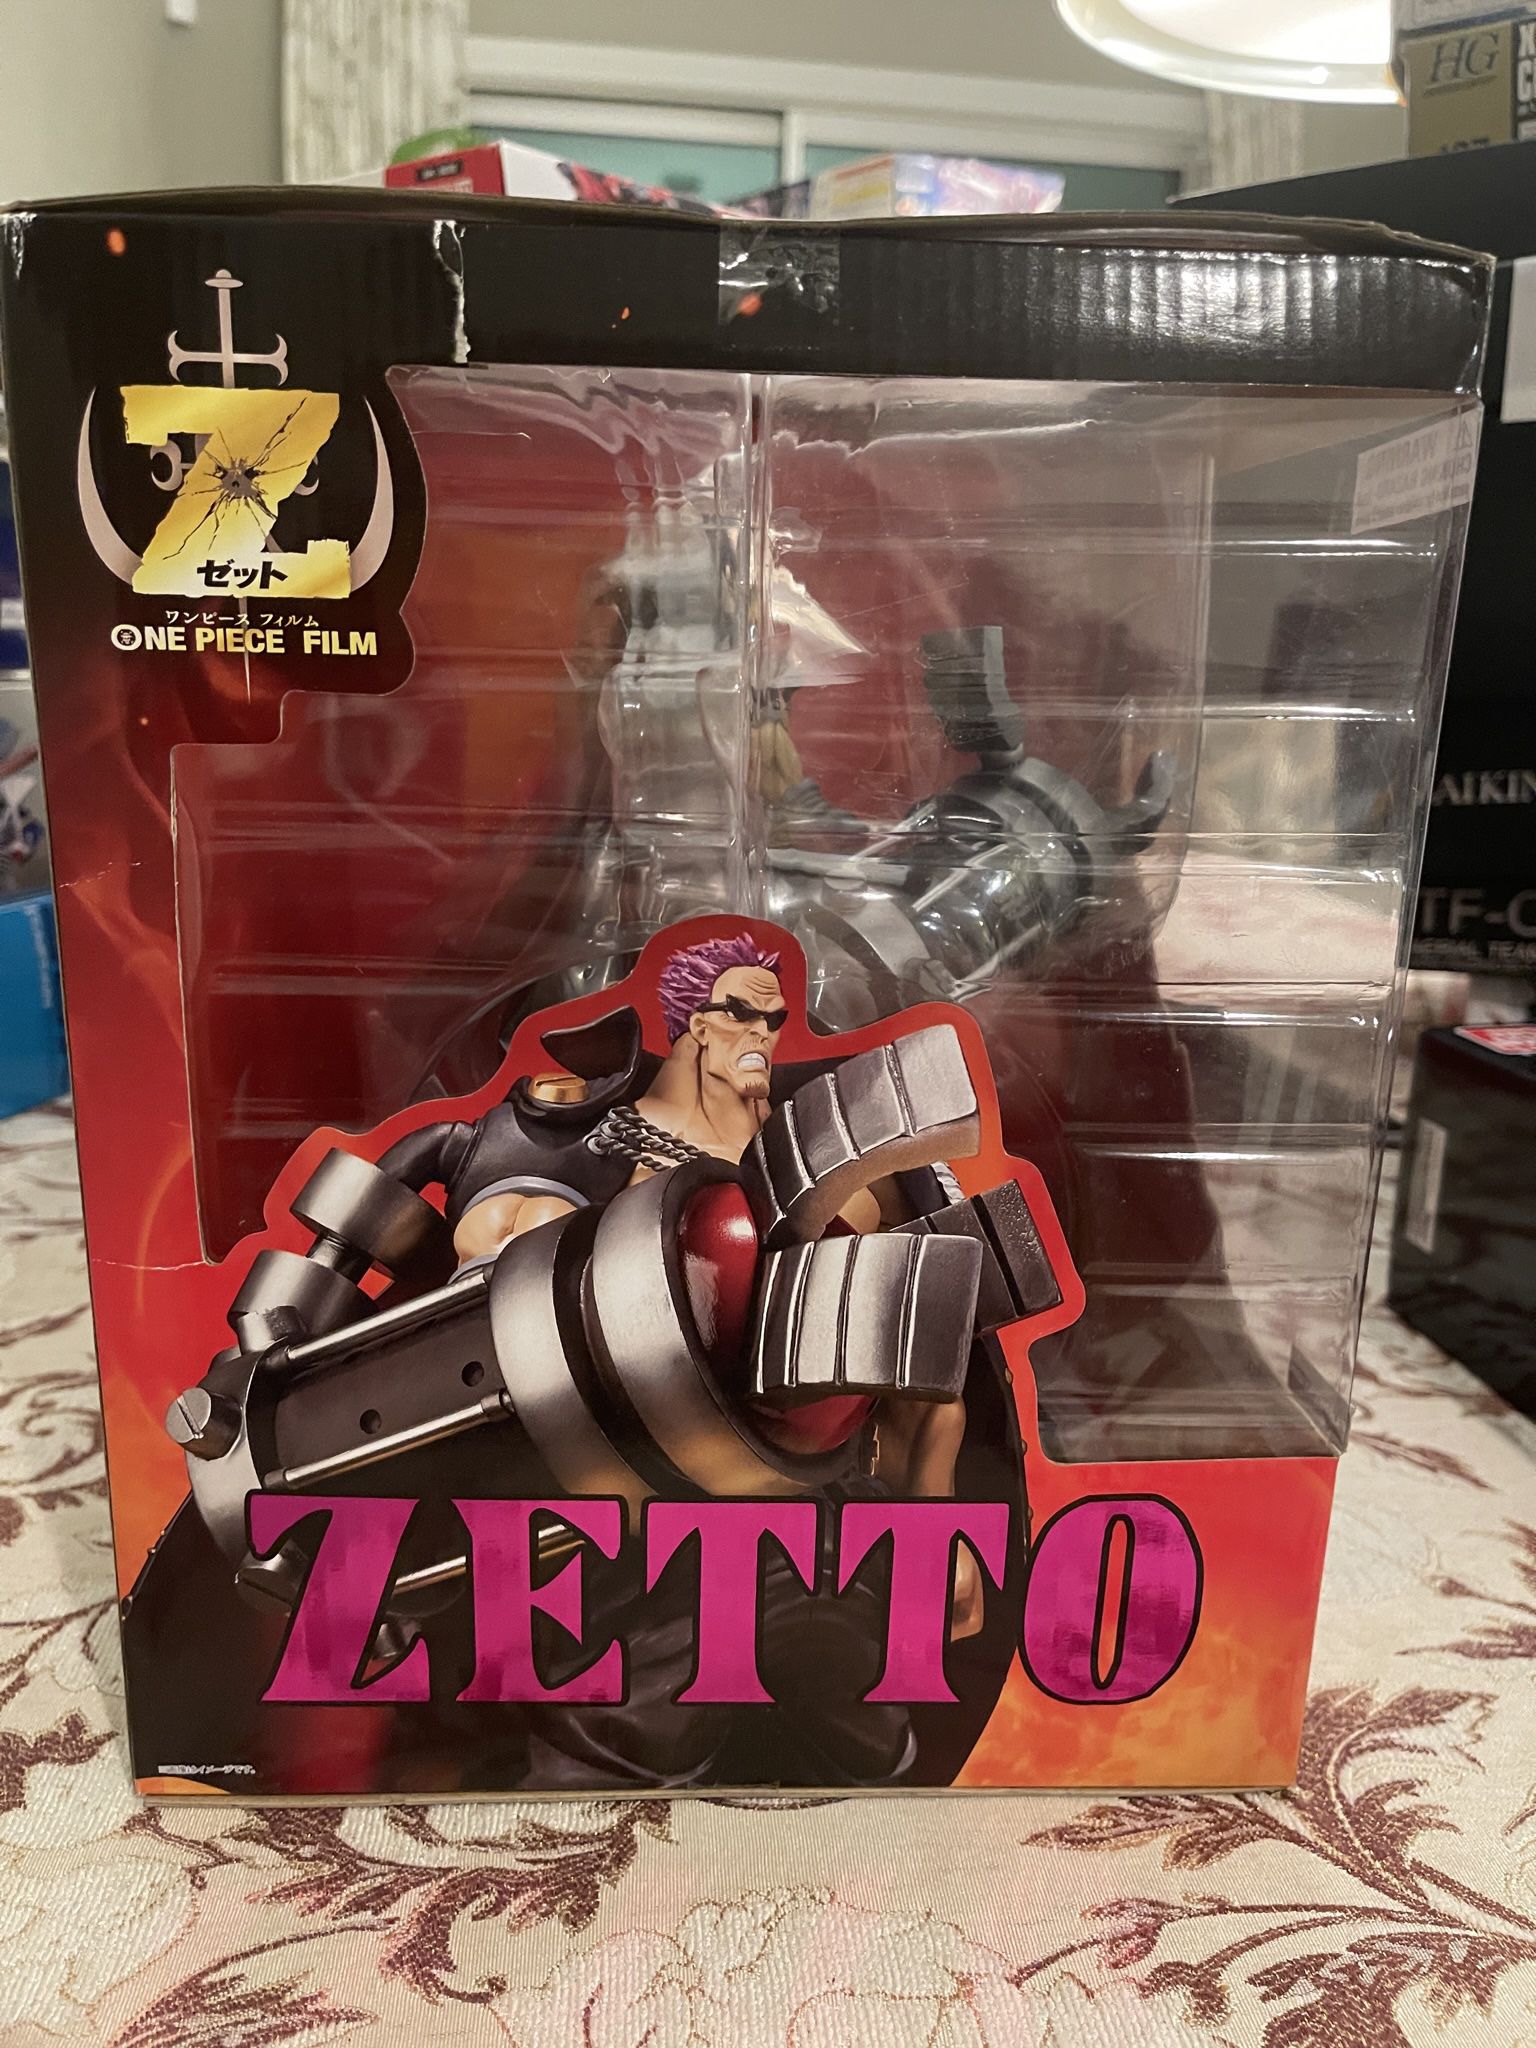 Figuarts Zero One Piece Film Z Zetto Pvc Figure Bandai Tamashii Nation